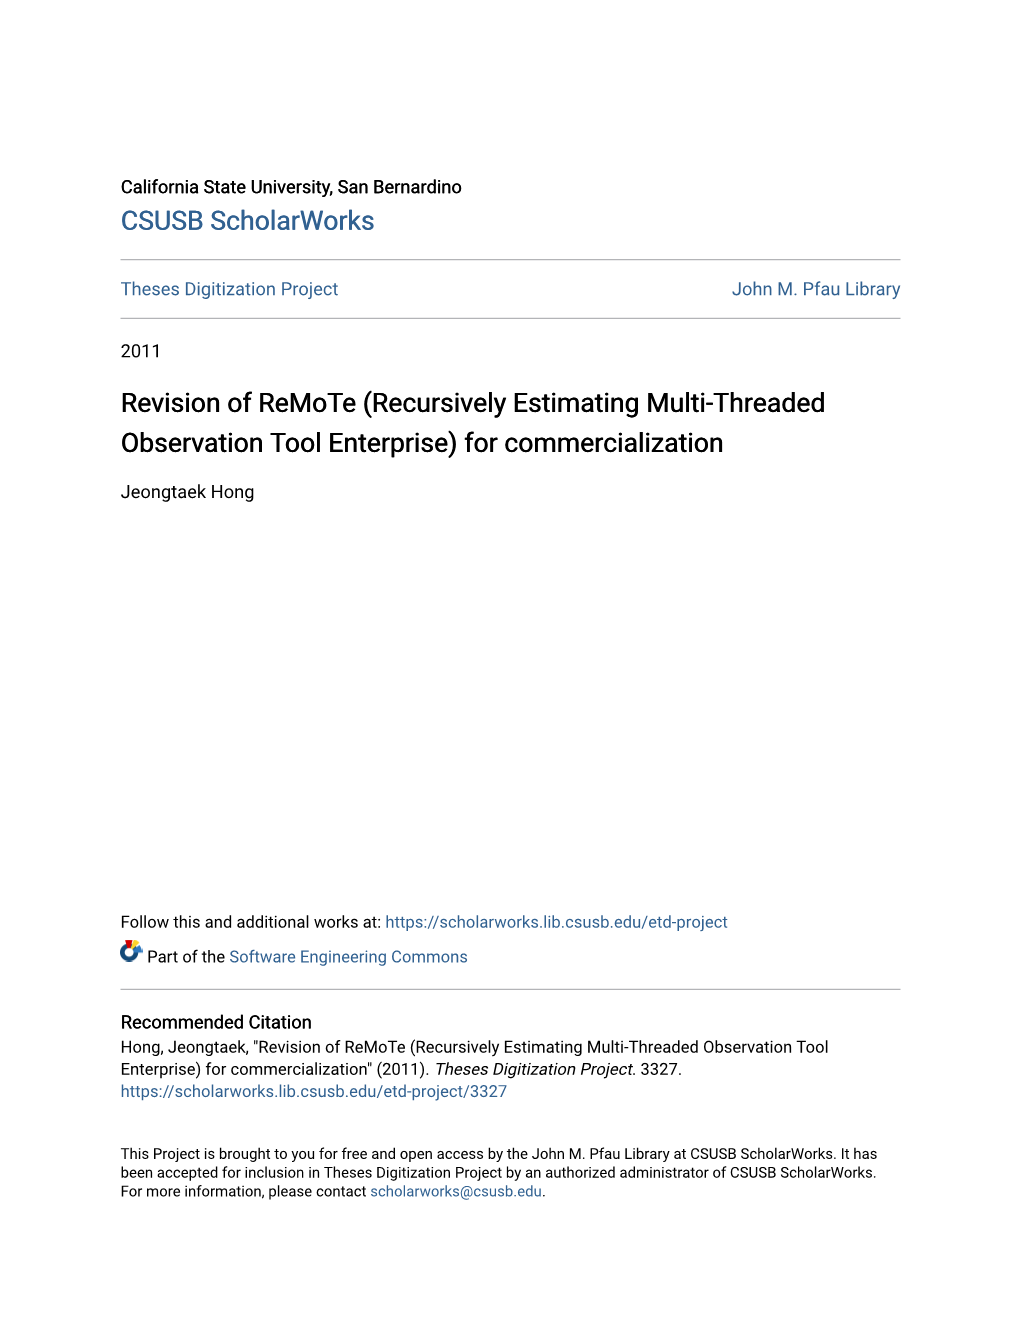 Recursively Estimating Multi-Threaded Observation Tool Enterprise) for Commercialization